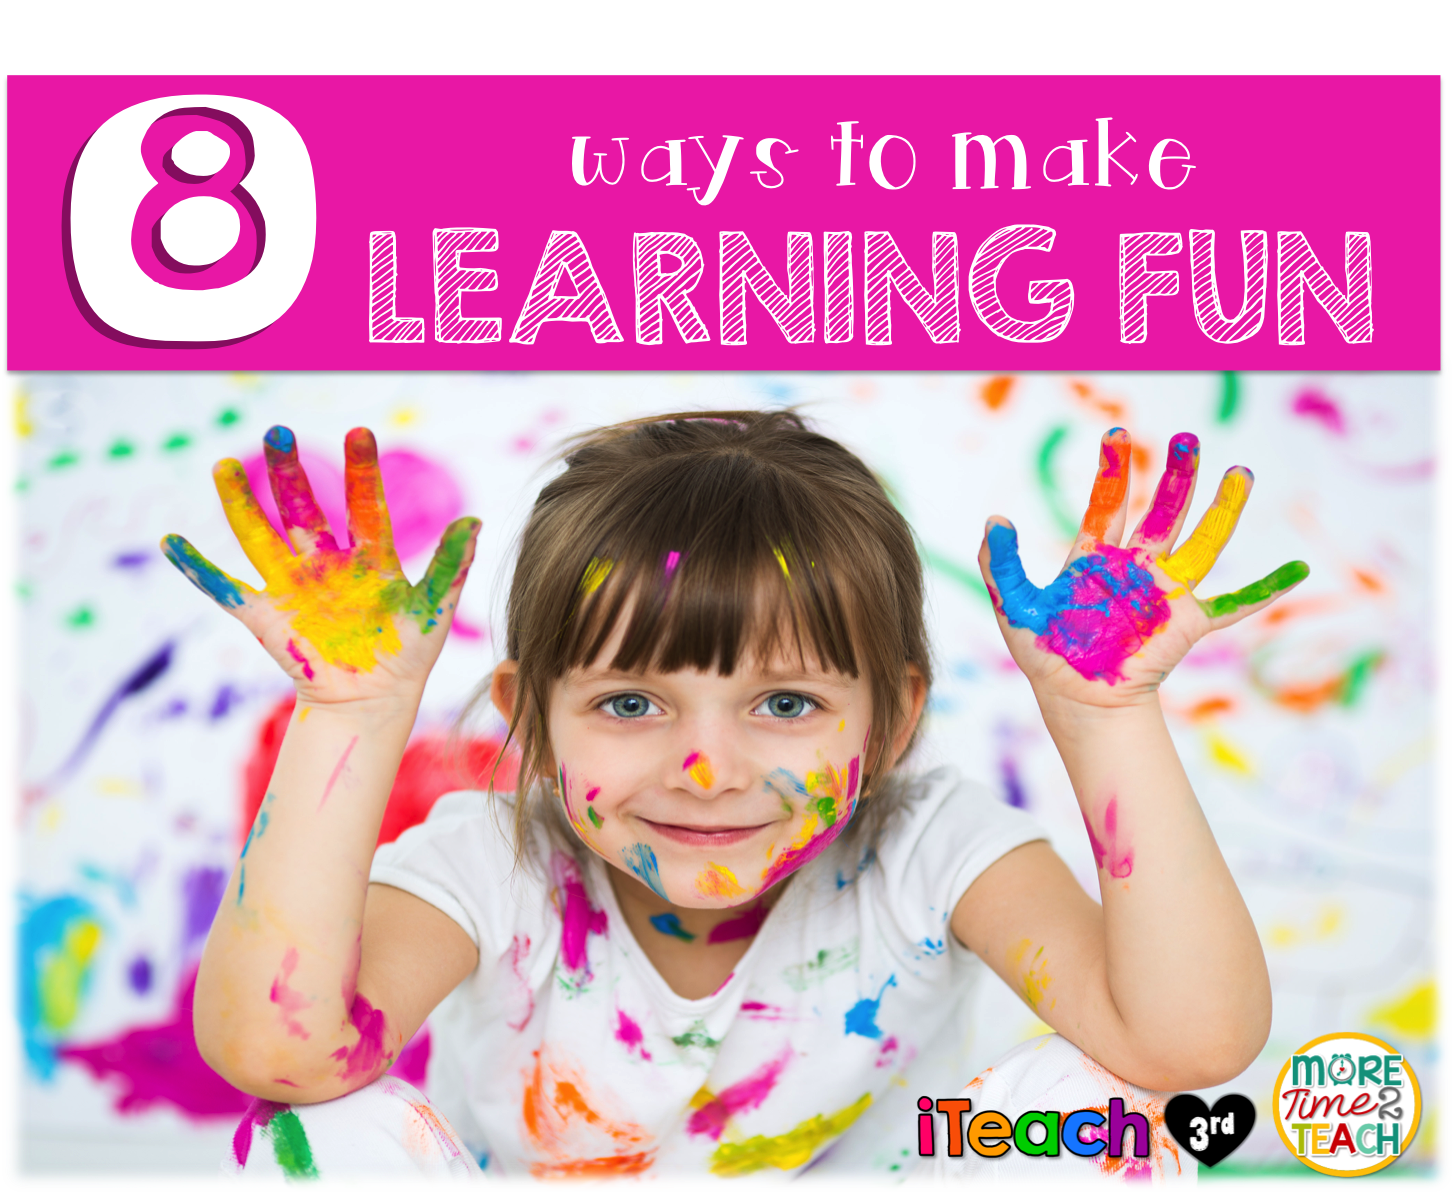 Go make fun. Make Learning fun. Making Learning fun. What makes Learning fun. Learning made fun.